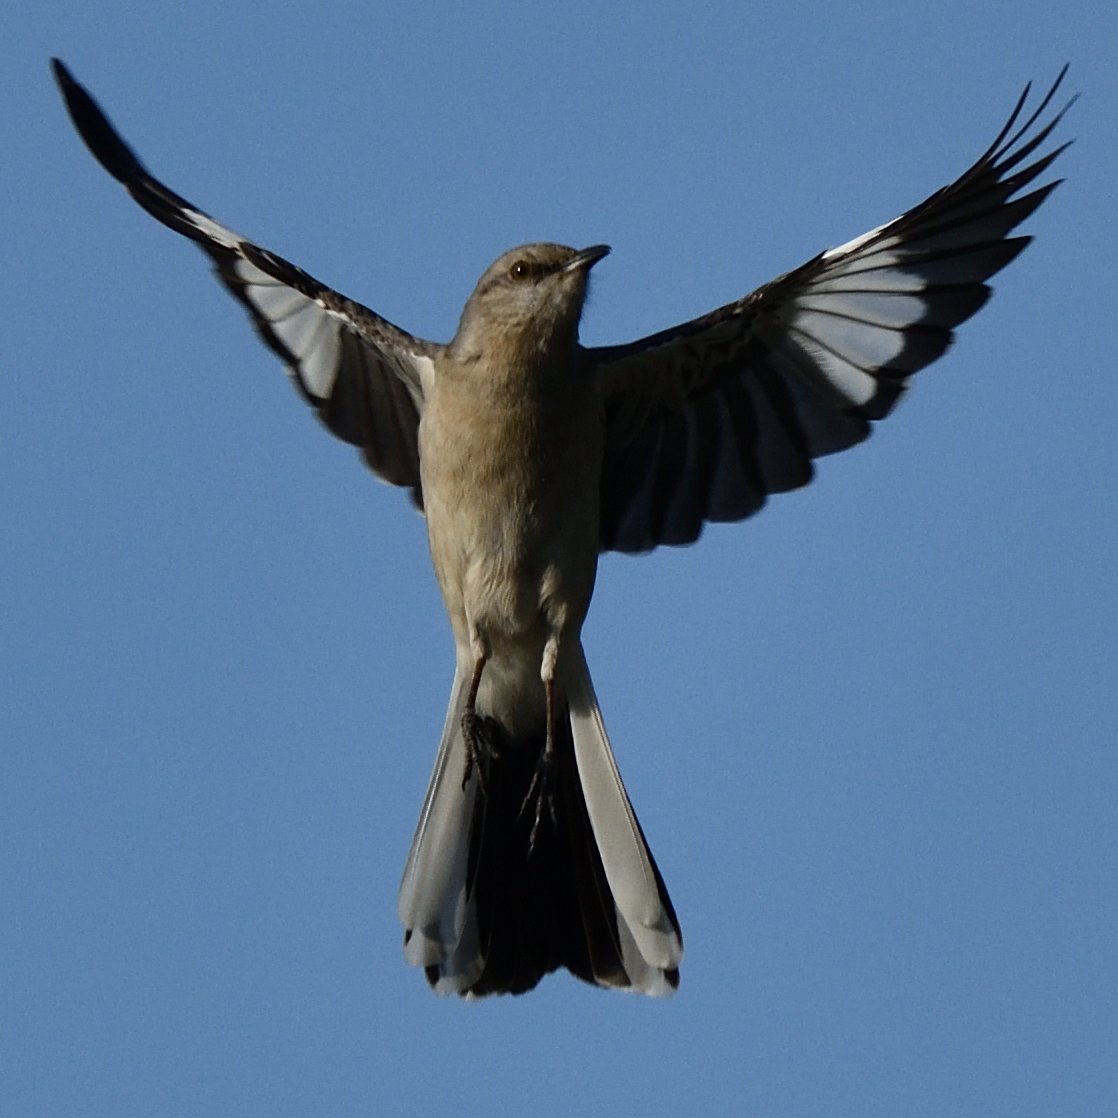 Northern Mockingbird
#birdphotography  #birdwatching #wildlifephotography 
#birds #NorthernMockingbird